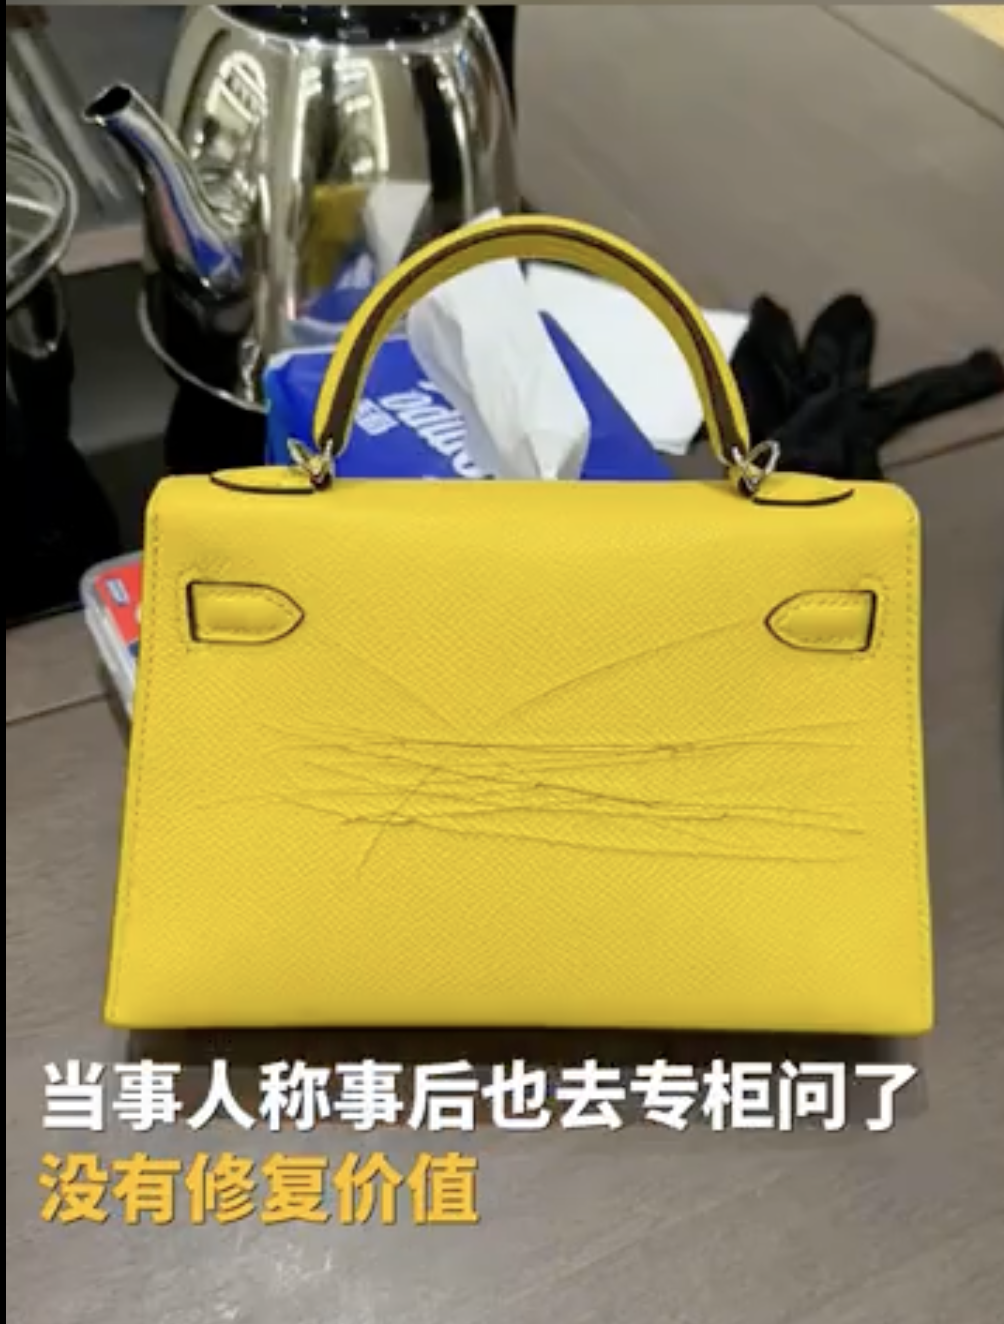 Rm105k hermès bag the china women scratched 2